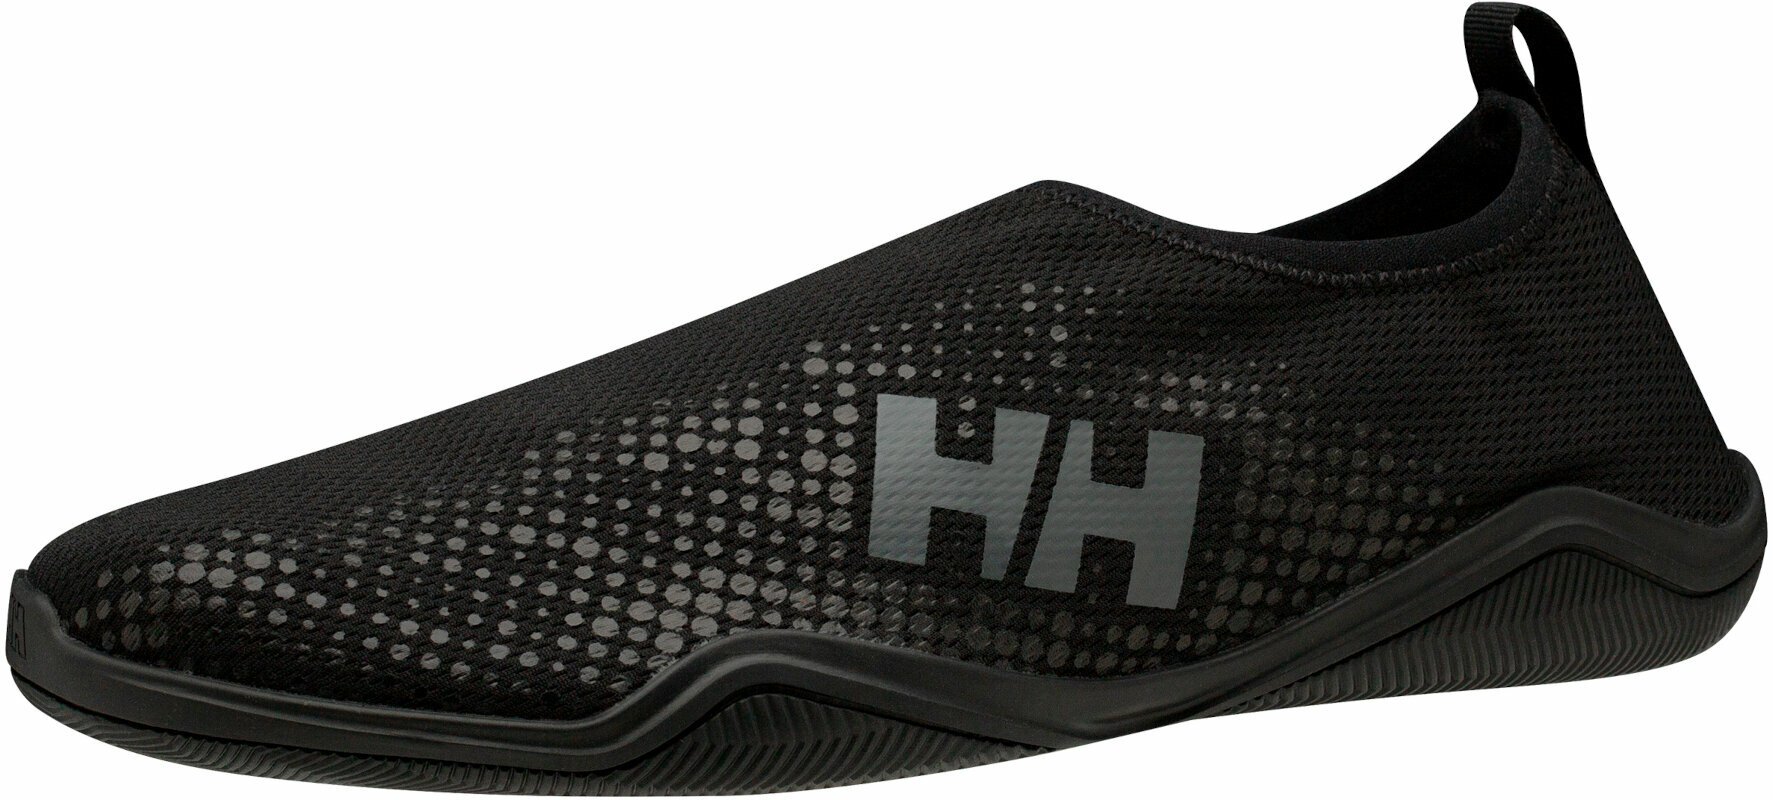 Mens Sailing Shoes Helly Hansen Men's Crest Watermoc Black/Charcoal 46